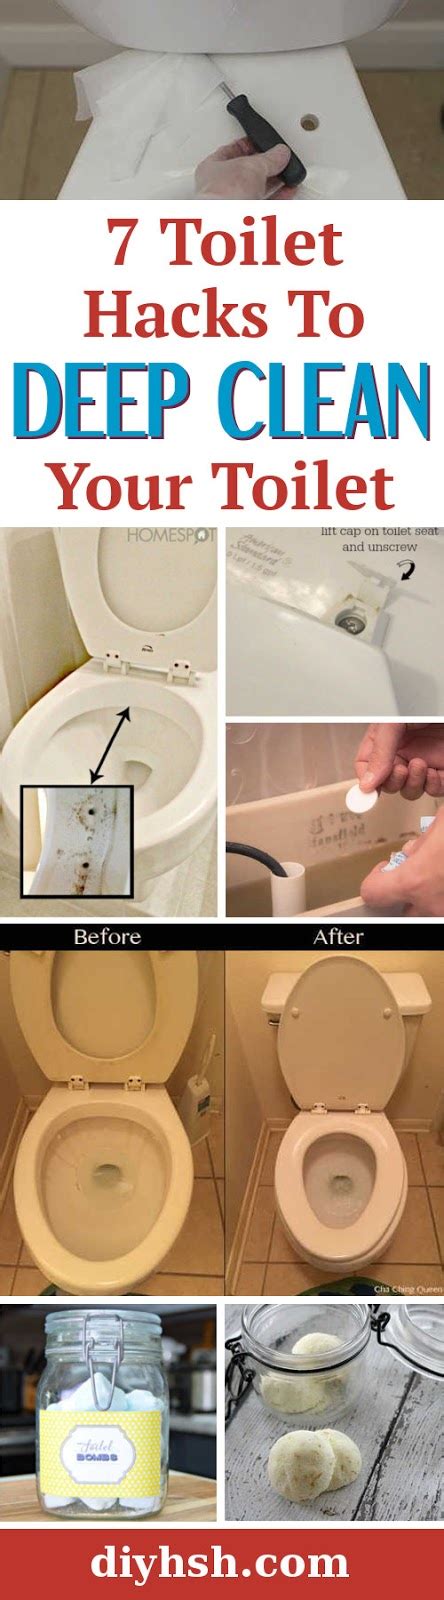 7 toilet hacks to deep clean your toilet diy home sweet home